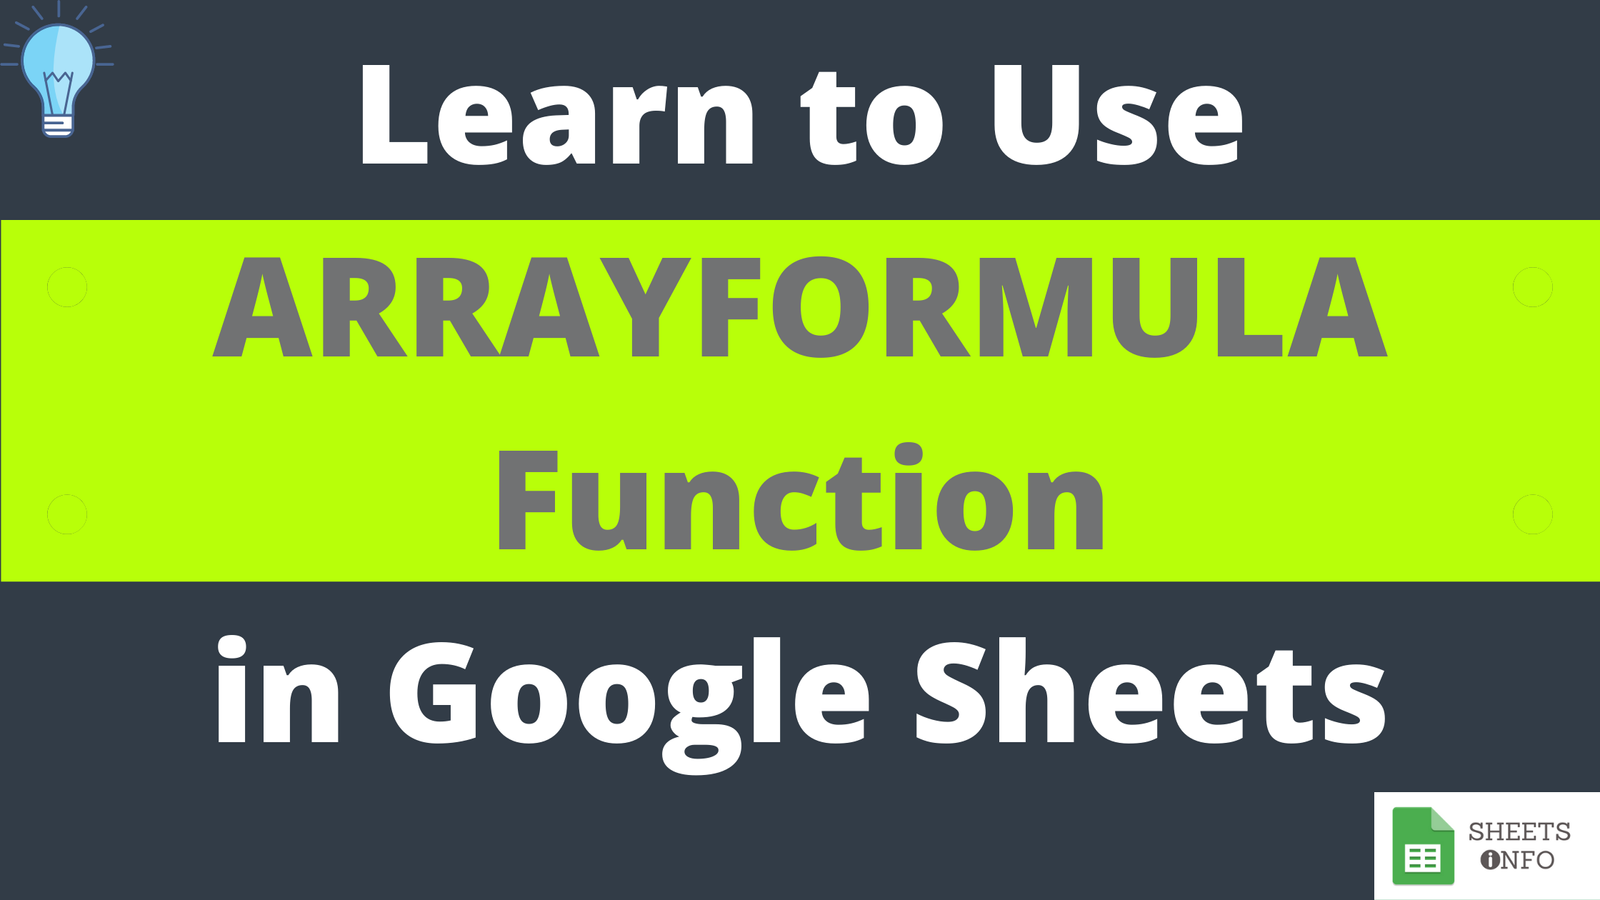 ARRAYFORMULA Function in Google sheet